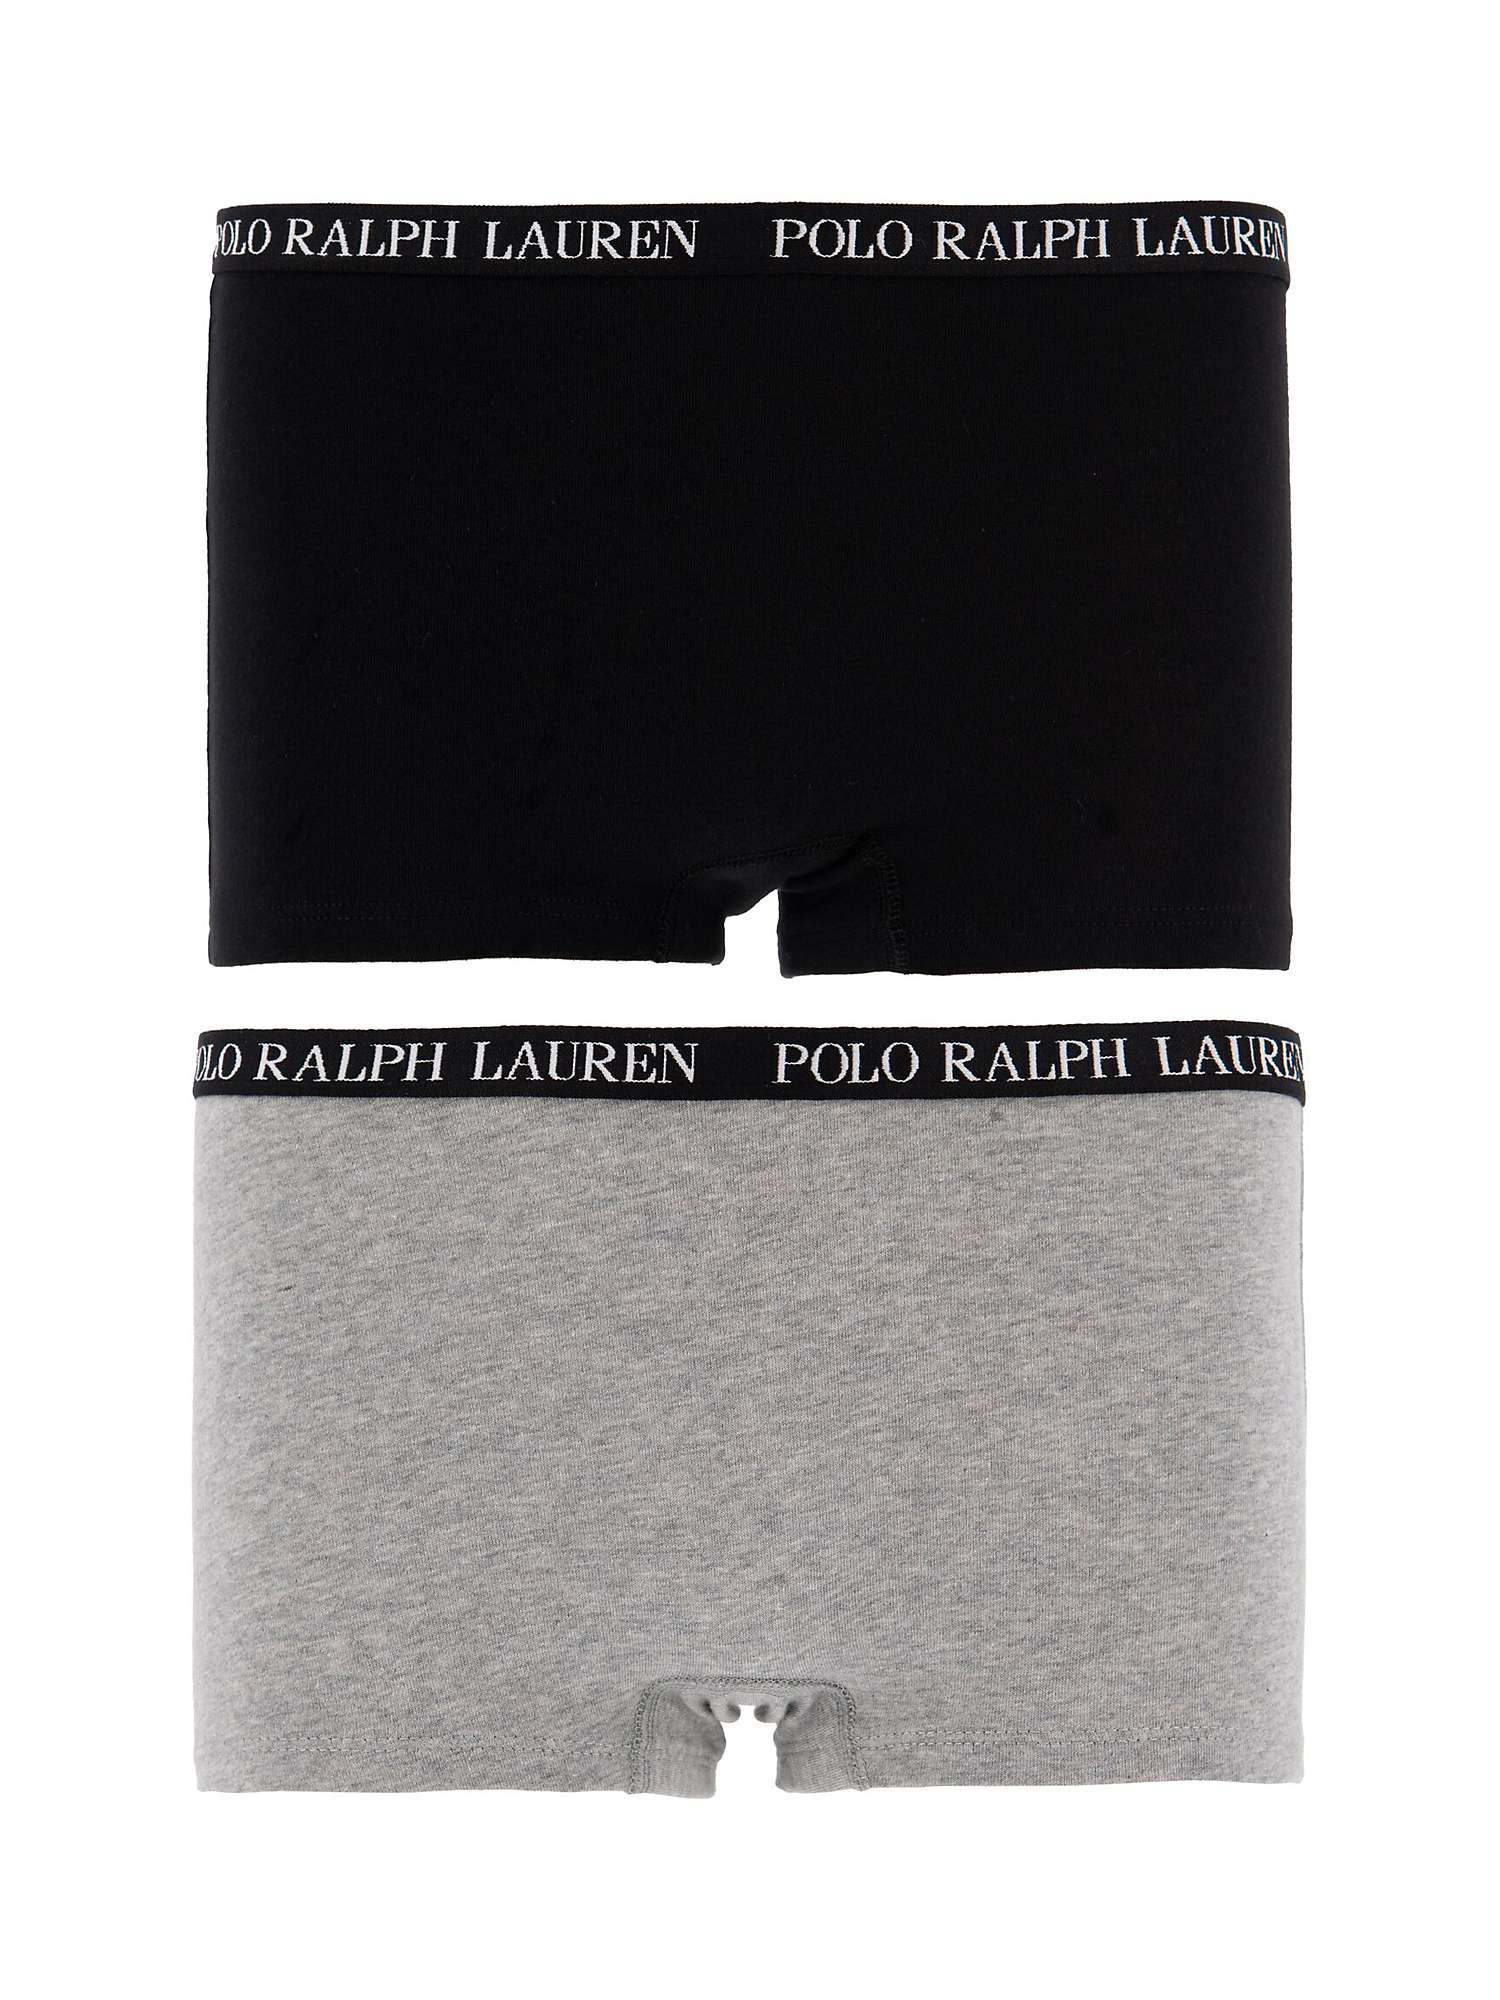 Buy Polo Ralph Lauren Kids' Cotton Blend Underwear Shorts, Pack of 2, Black/Grey Online at johnlewis.com